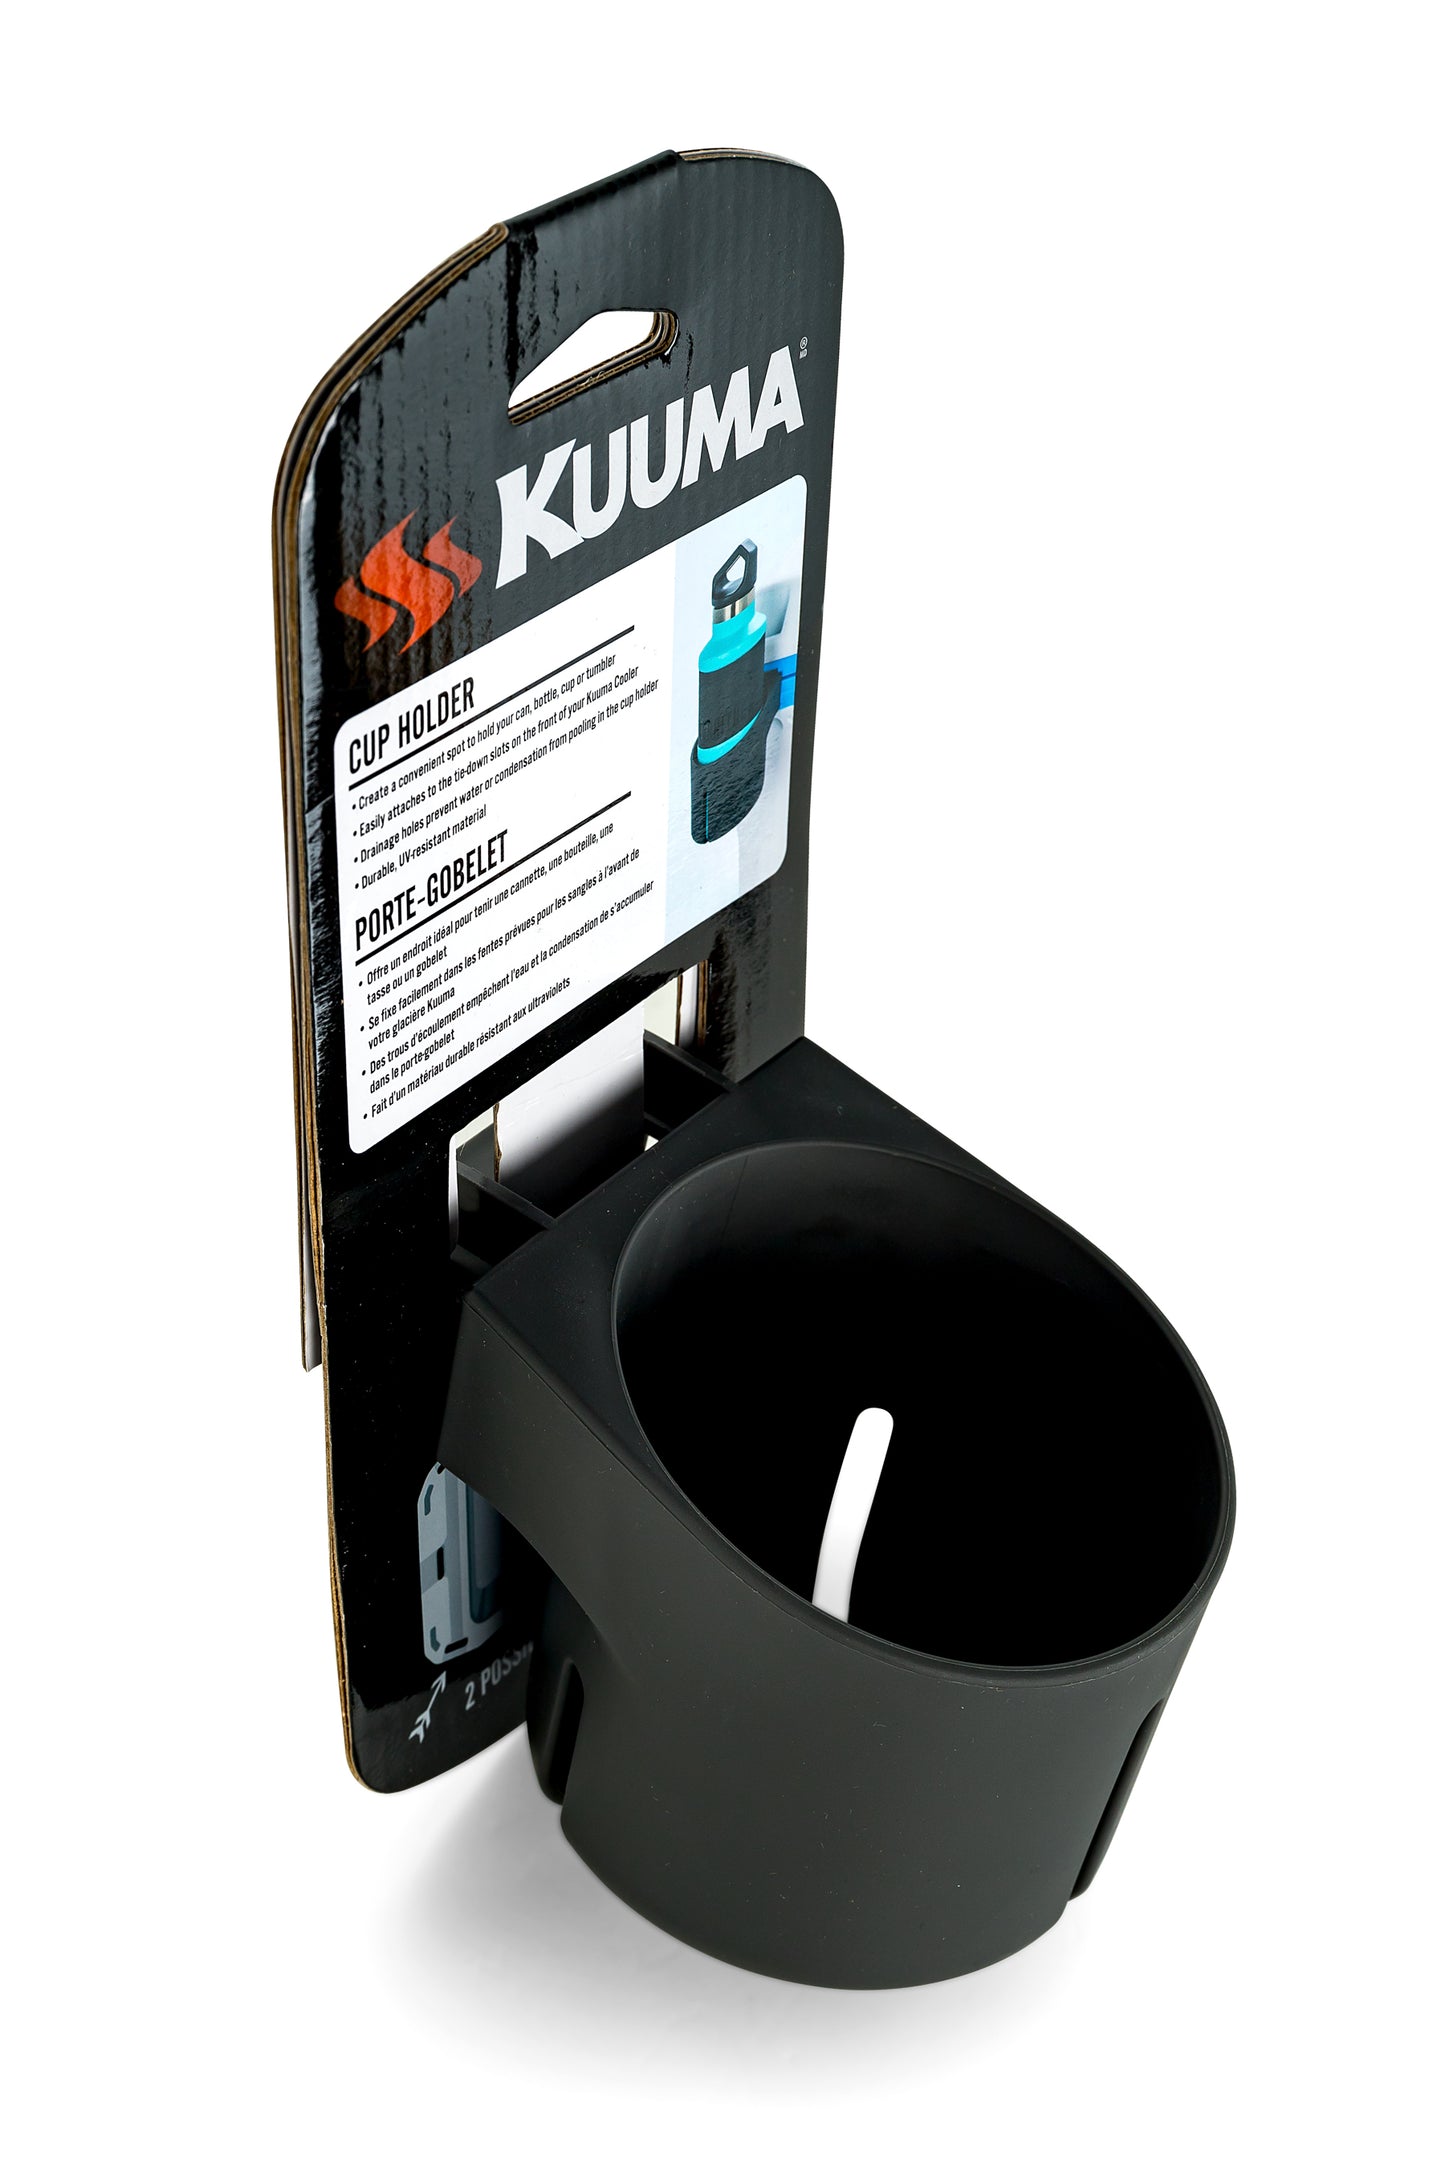 Kuuma Premium Cooler Cup Holder